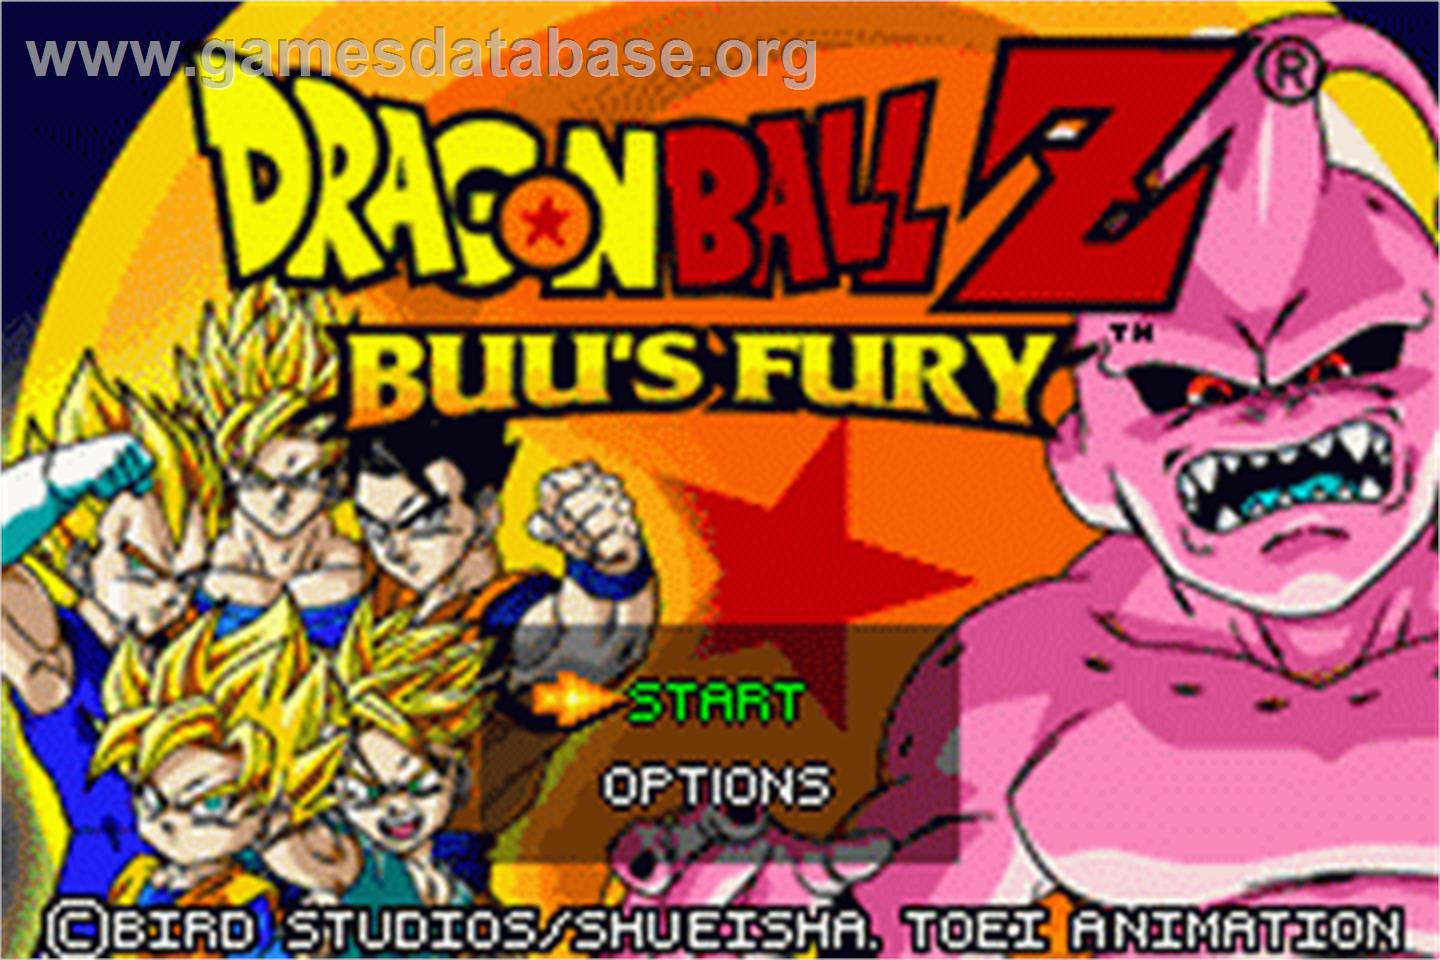 Dragonball Z: Buu's Fury - Nintendo Game Boy Advance - Artwork - Title Screen